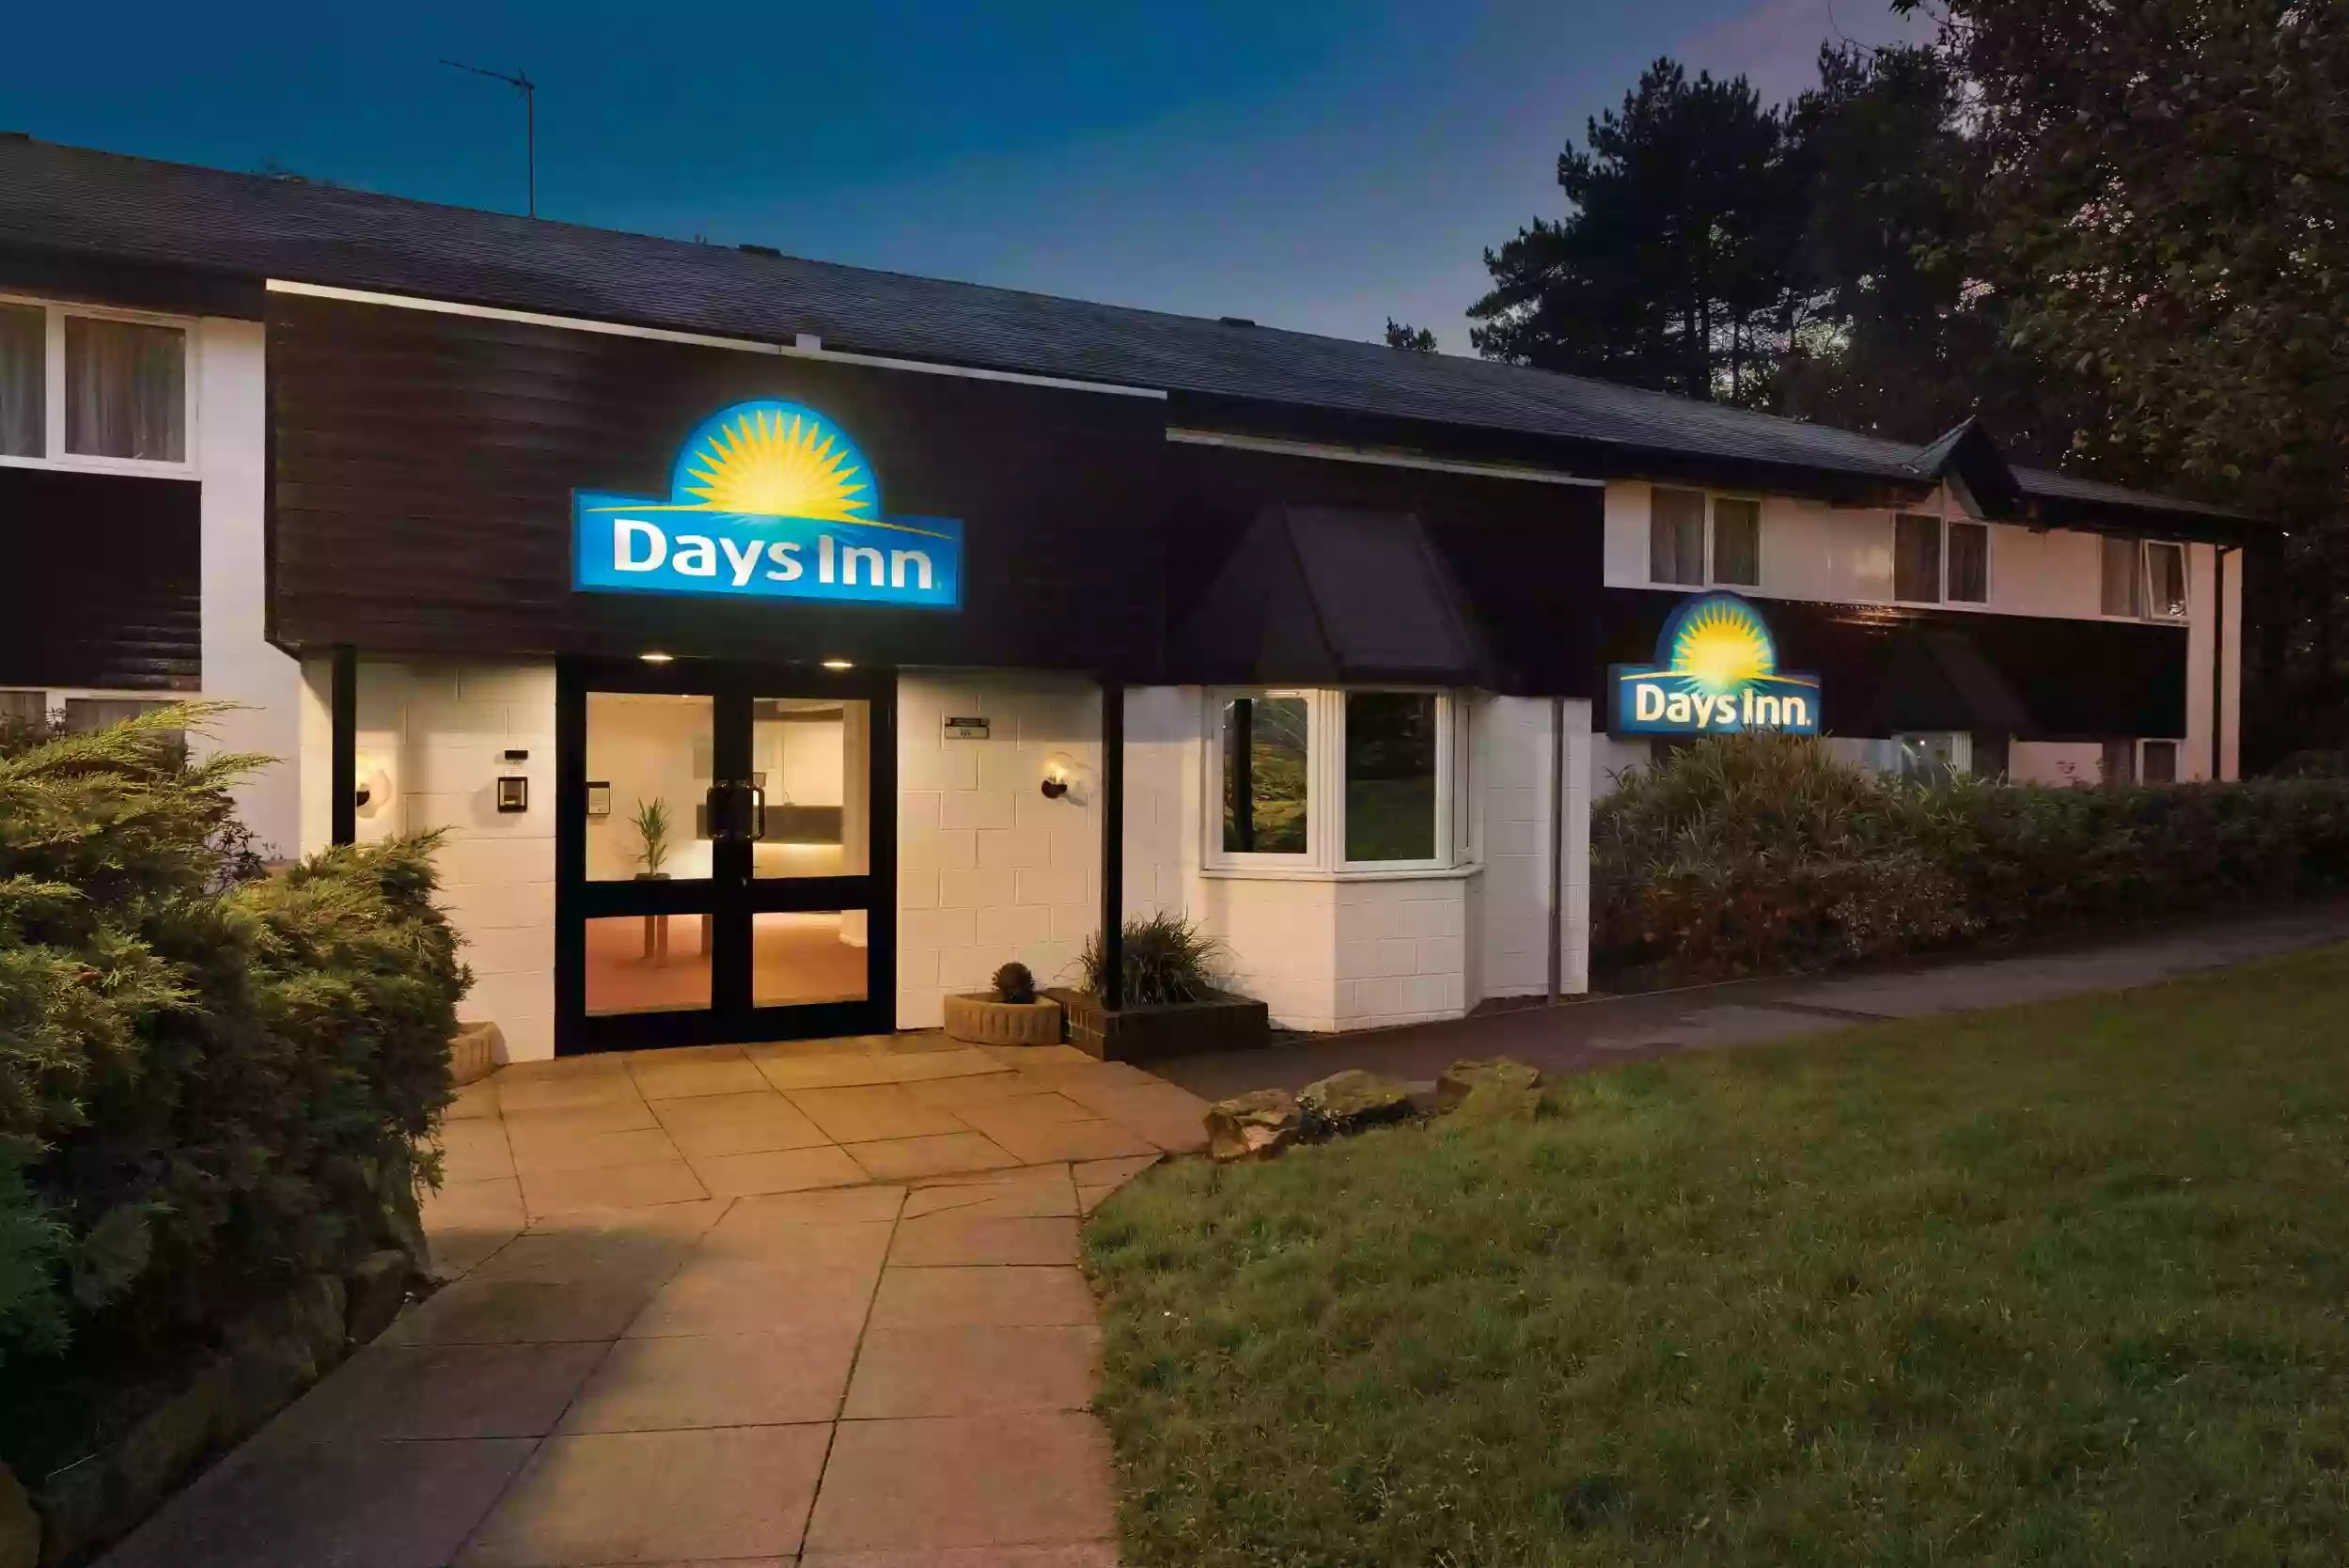 Days Inn by Wyndham Fleet M3